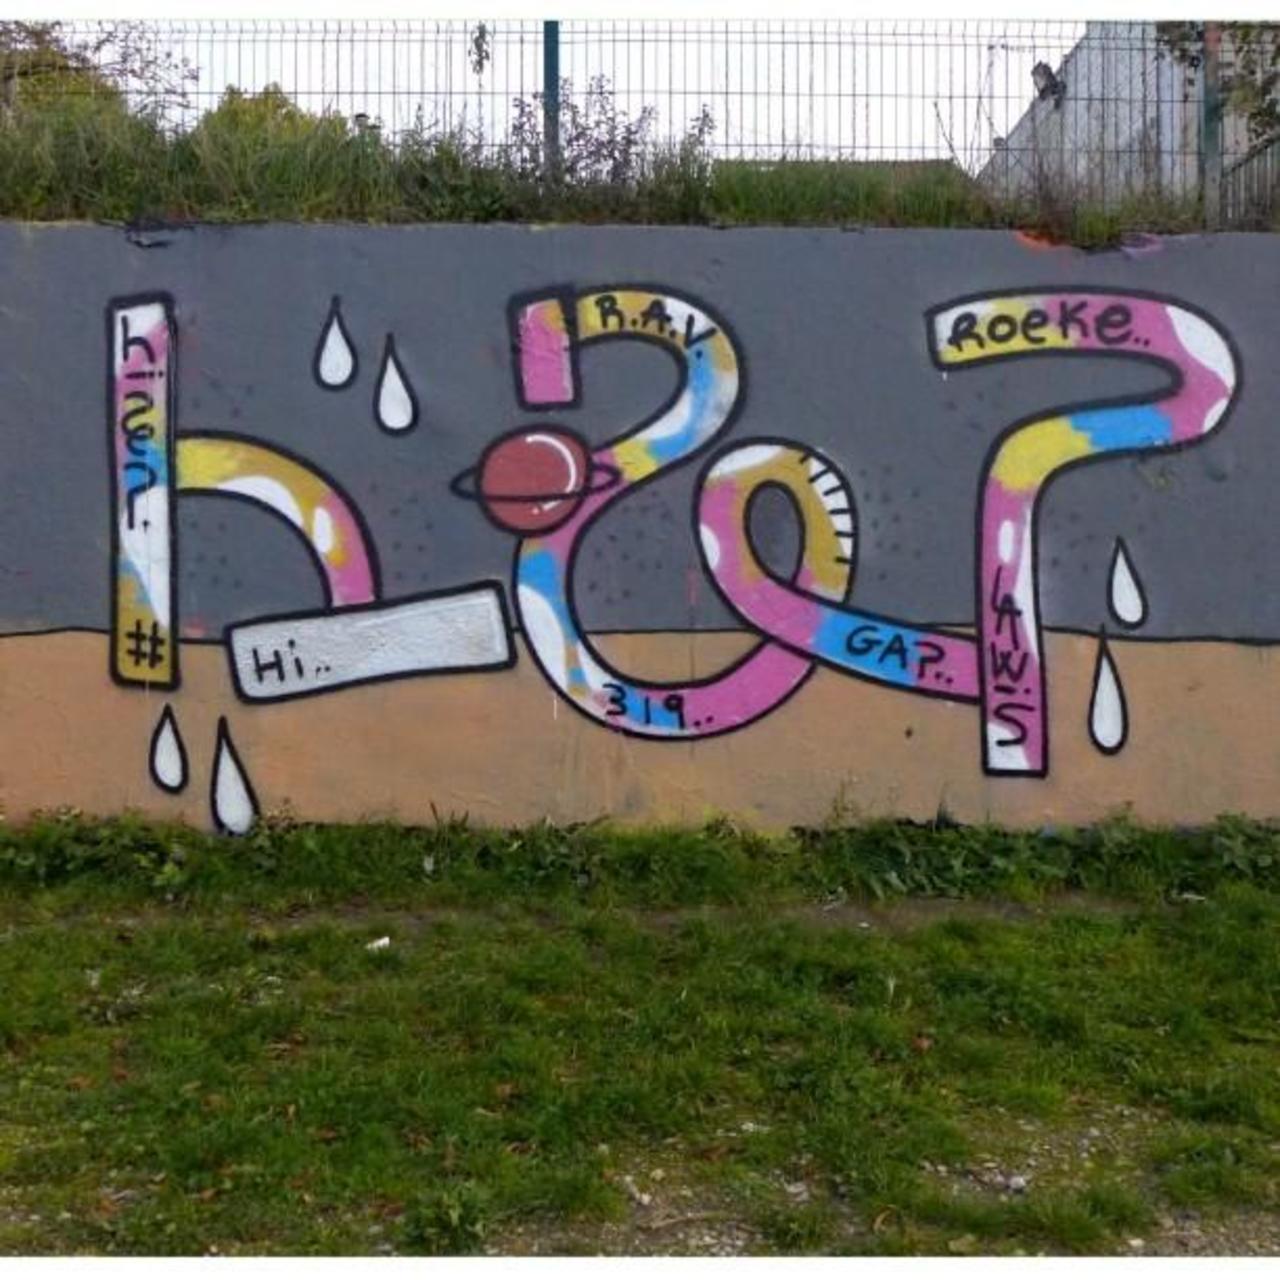 #streetart #graffiti #graff #art #fatcap #bombing #sprayart #spraycanart #wallart #handstyle #lettering #urbanart #… http://t.co/qNUMo4sqJs